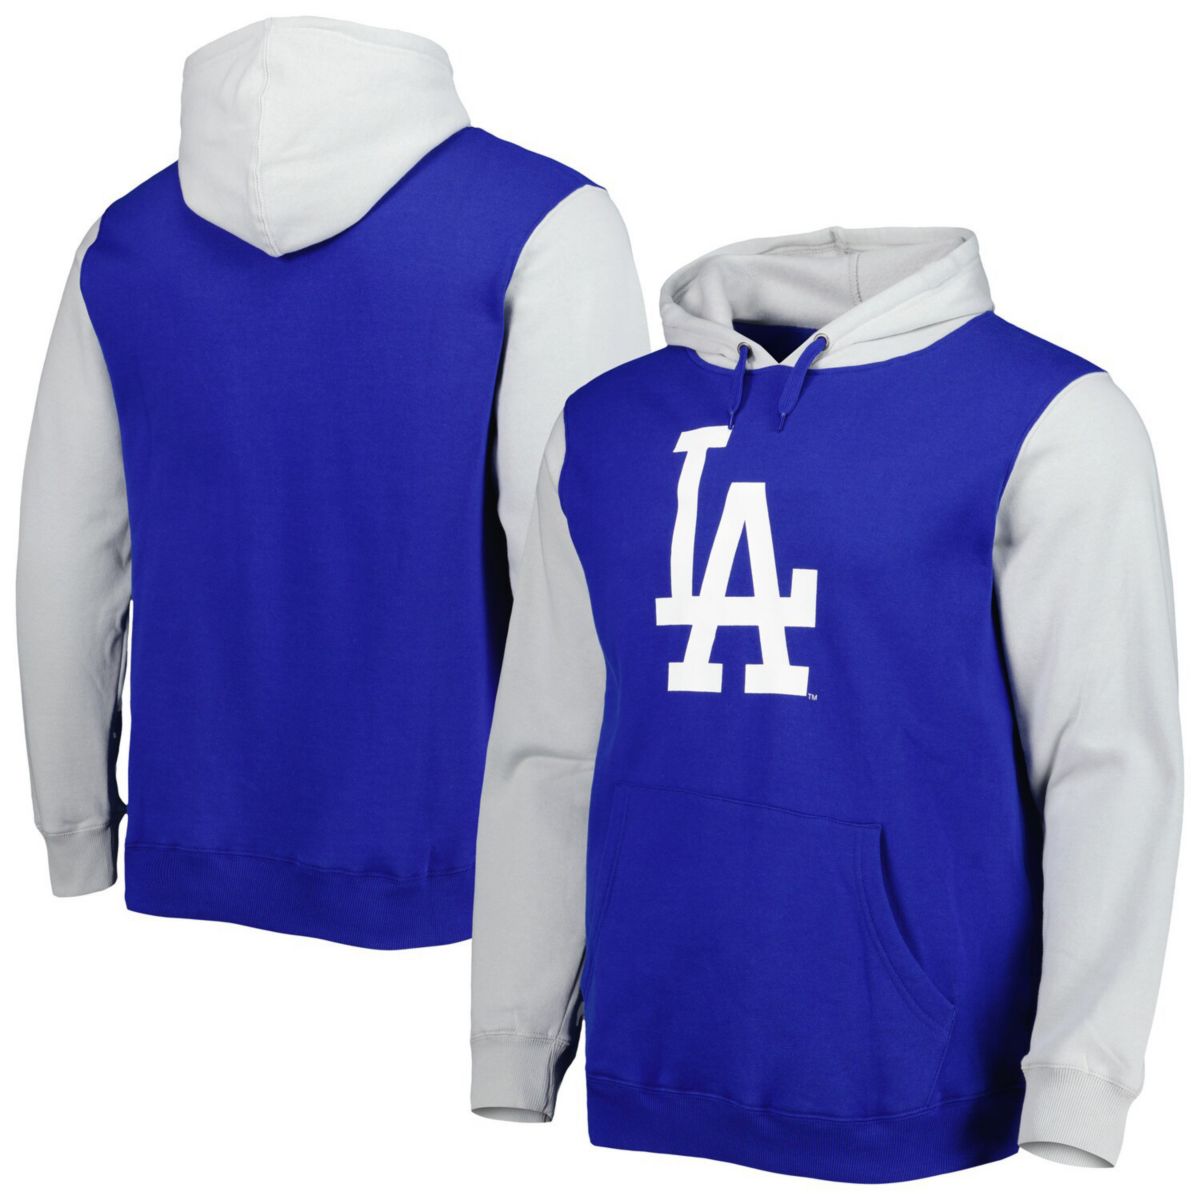 Мужской пуловер с капюшоном Stitches Royal/серый Los Angeles Dodgers Team Stitches